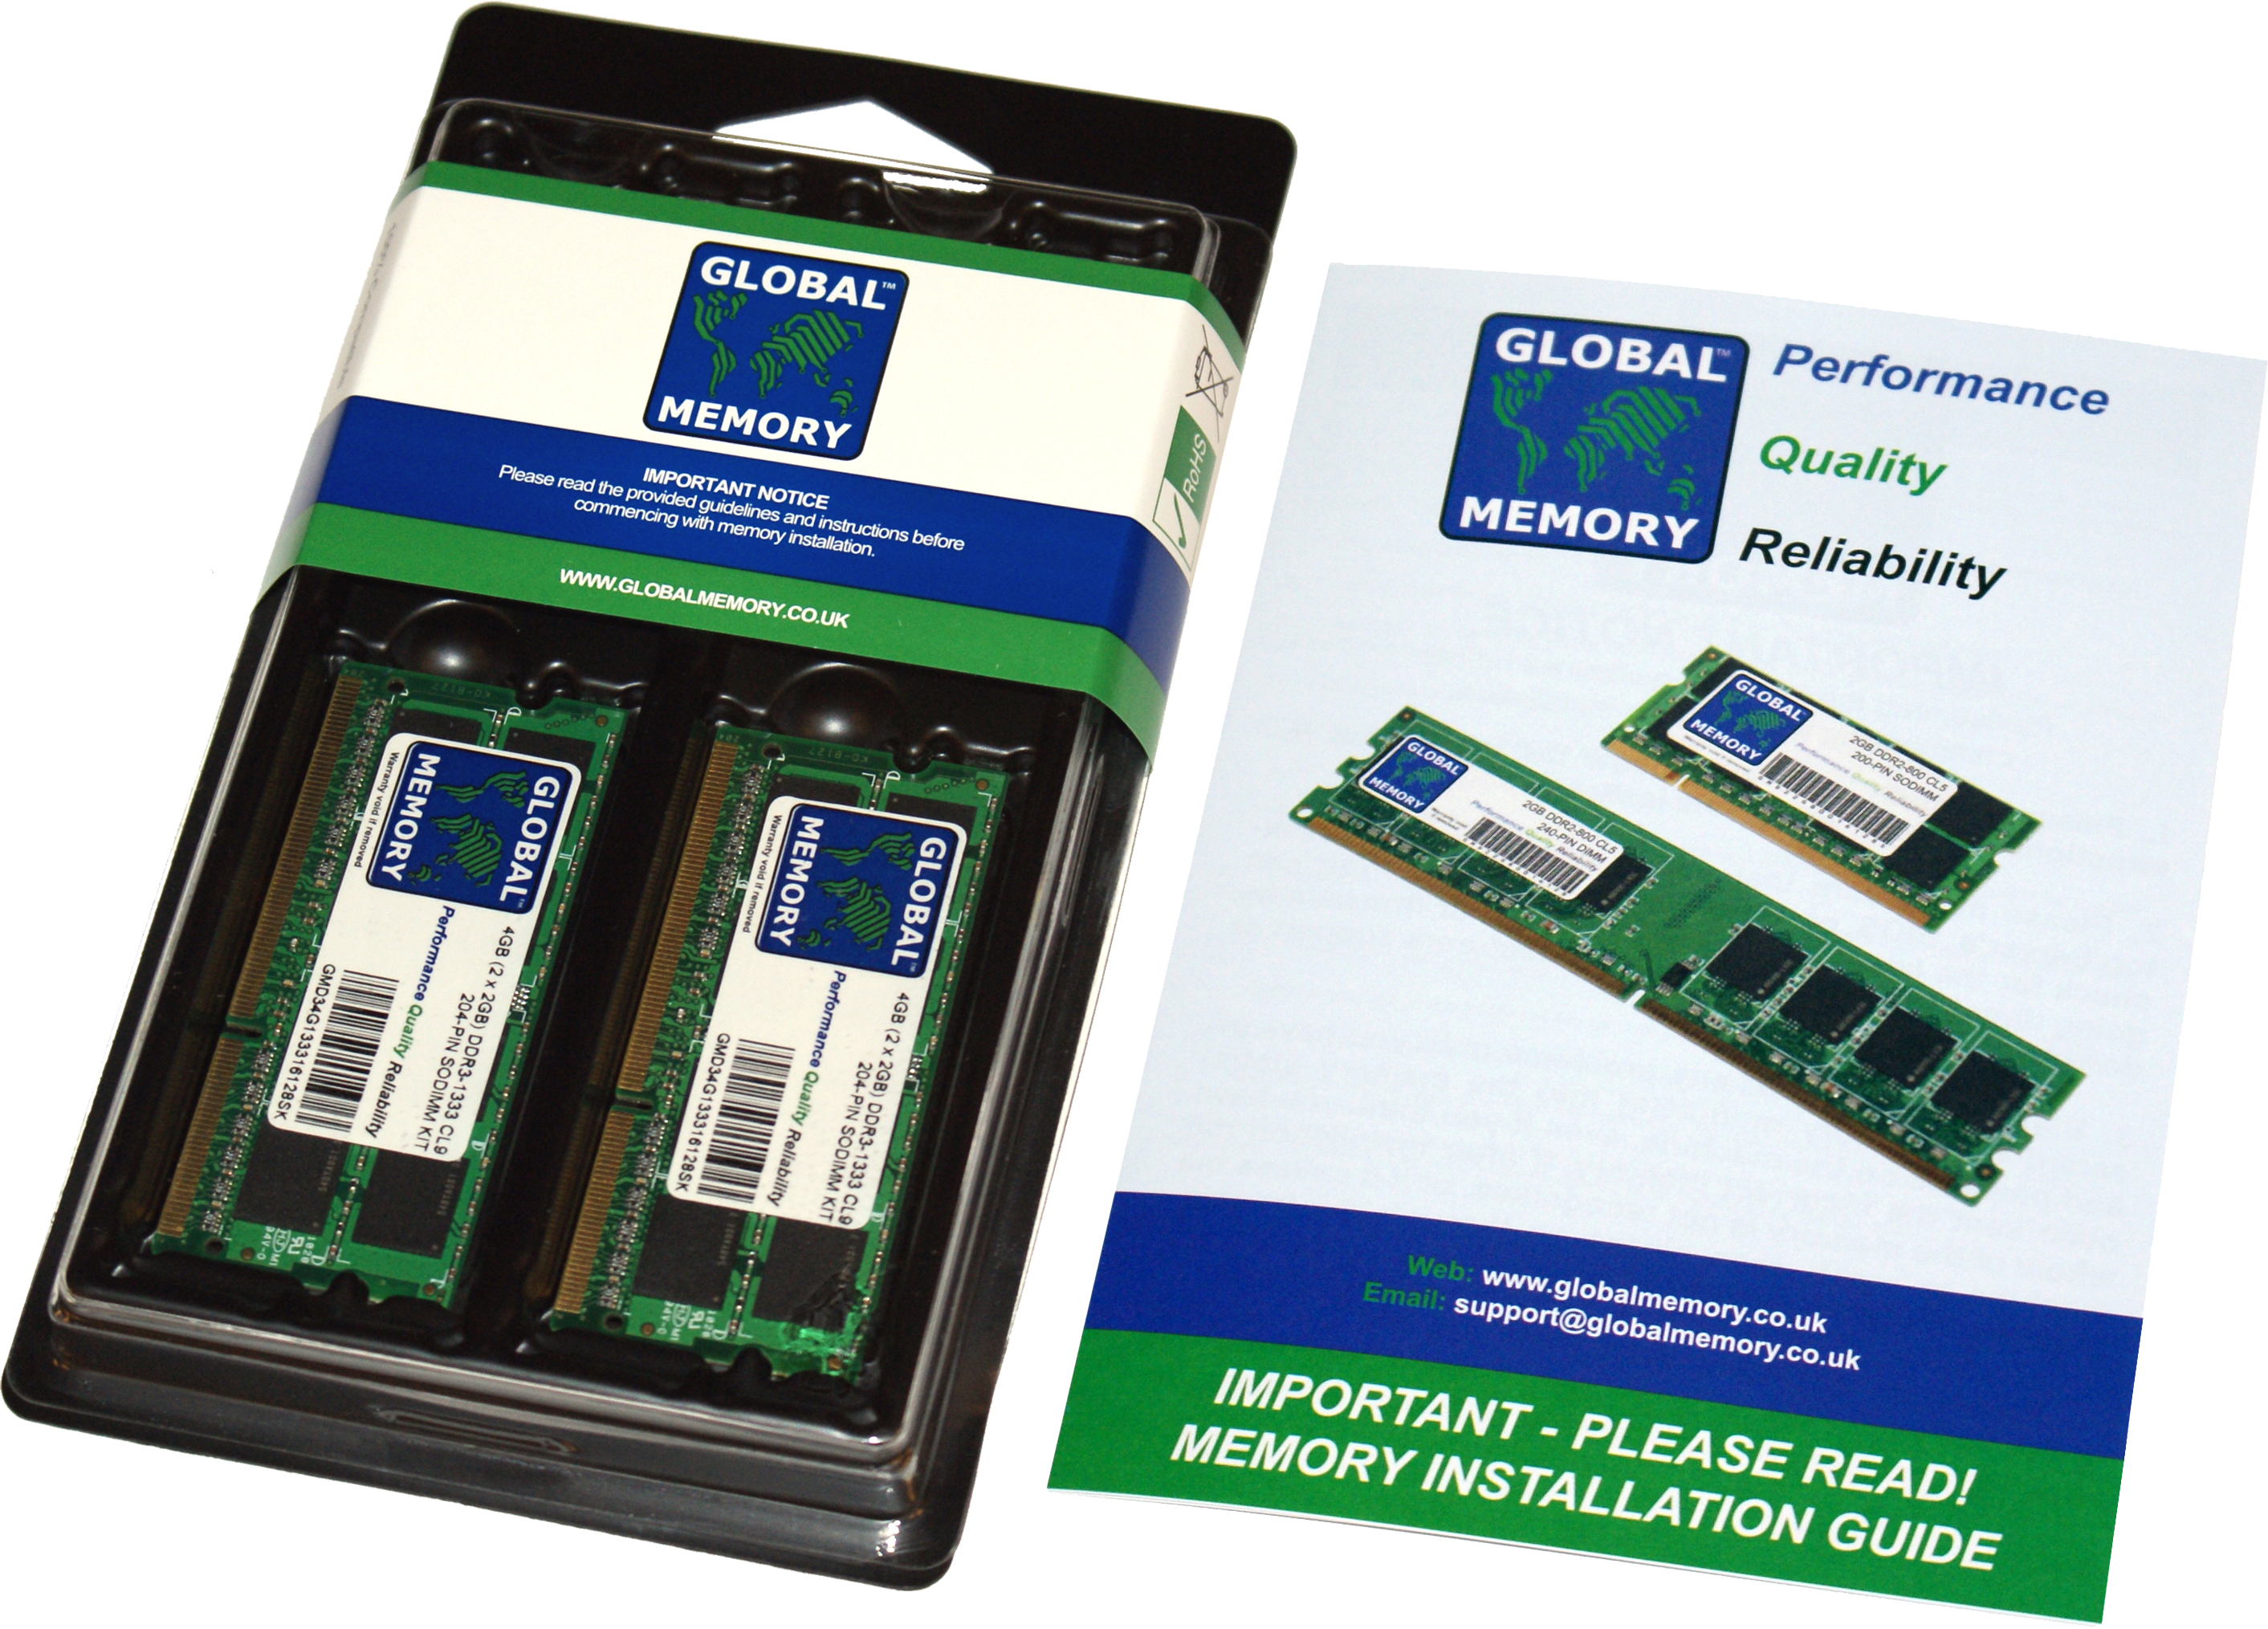 64GB (2 x 32GB) DDR4 2400MHz PC4-19200 260-PIN SODIMM MEMORY RAM KIT FOR LAPTOPS/NOTEBOOKS